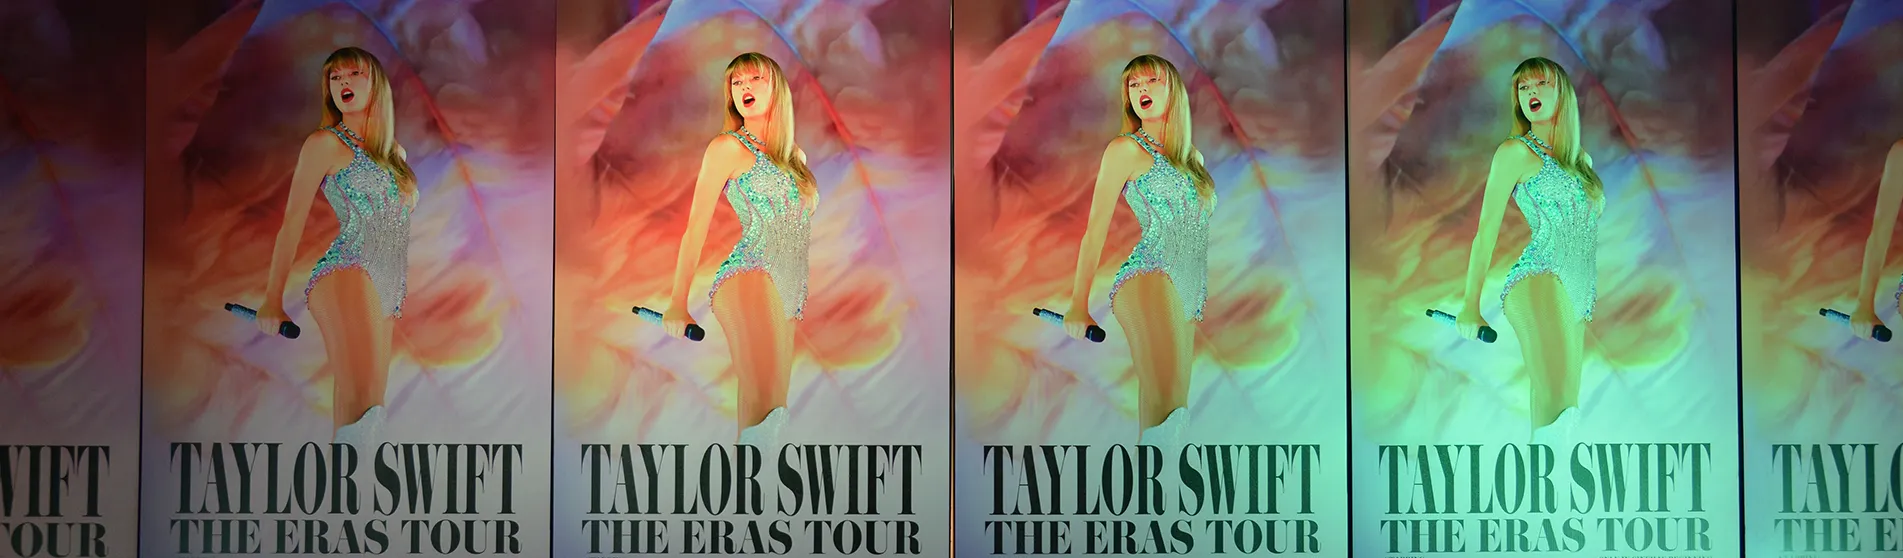 Taylor Swift Eras Tour poster